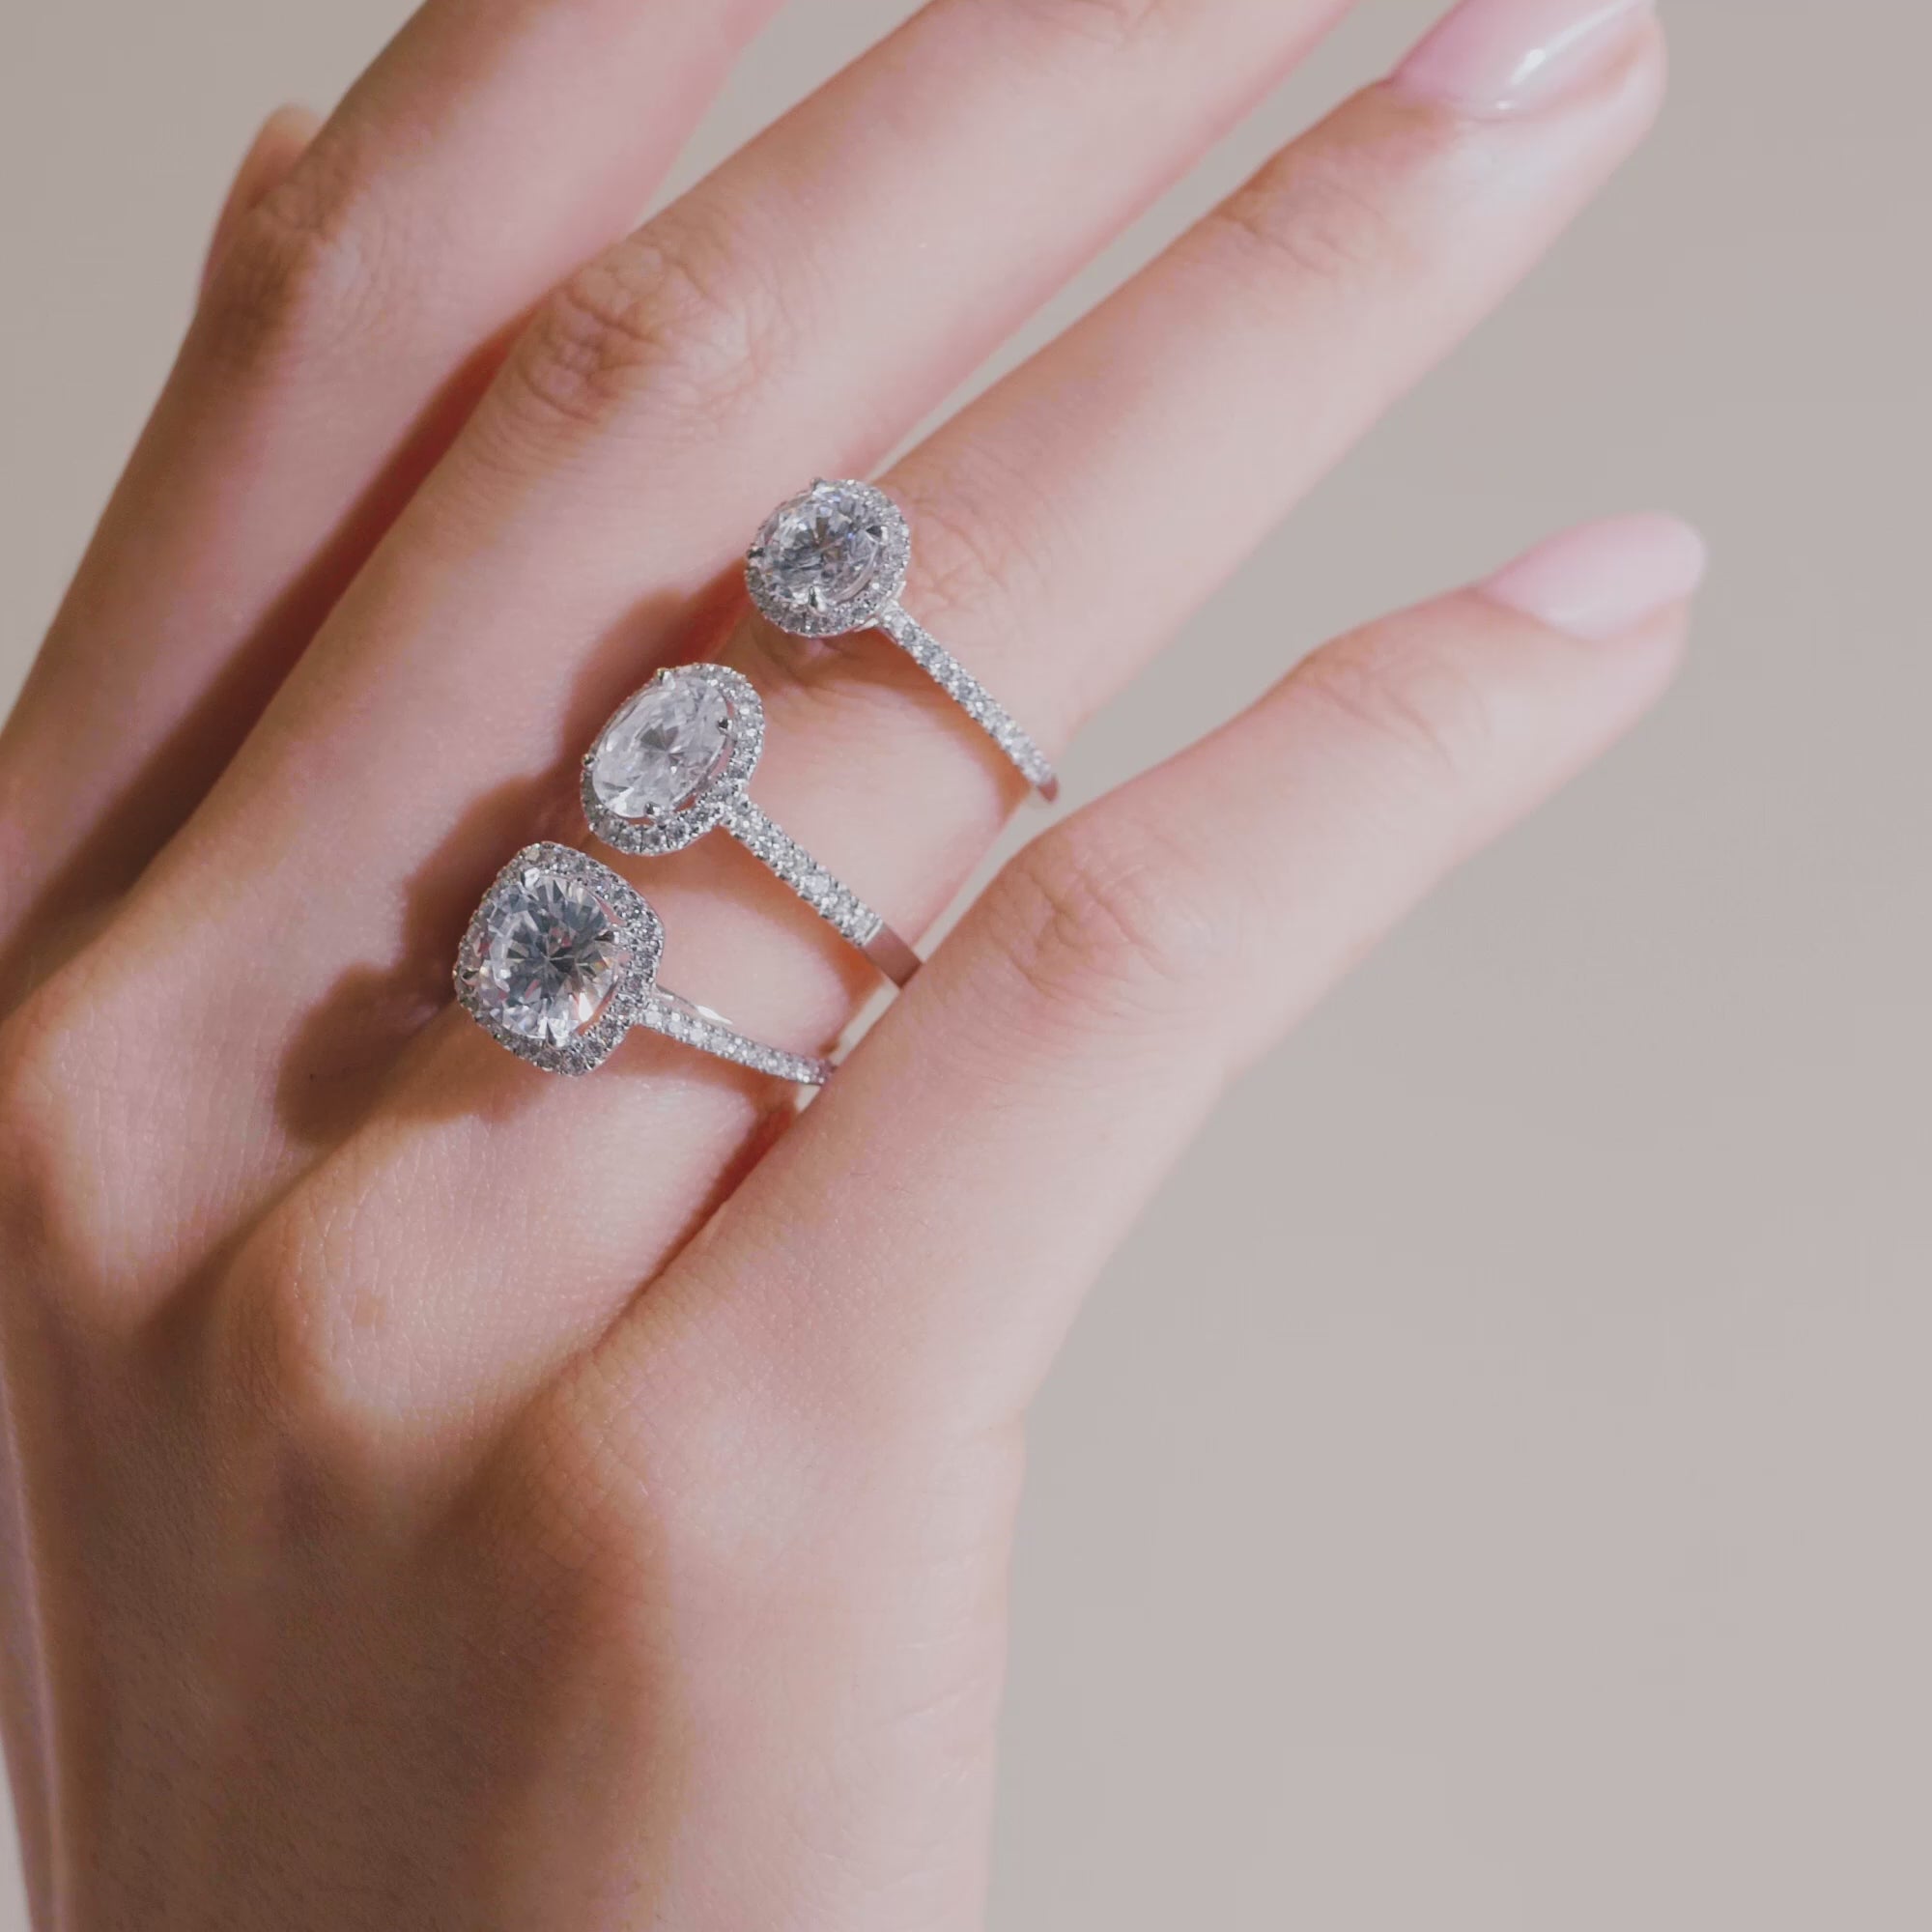 Halo Engagement Rings: Diamond Styles & Benefits | Zcova